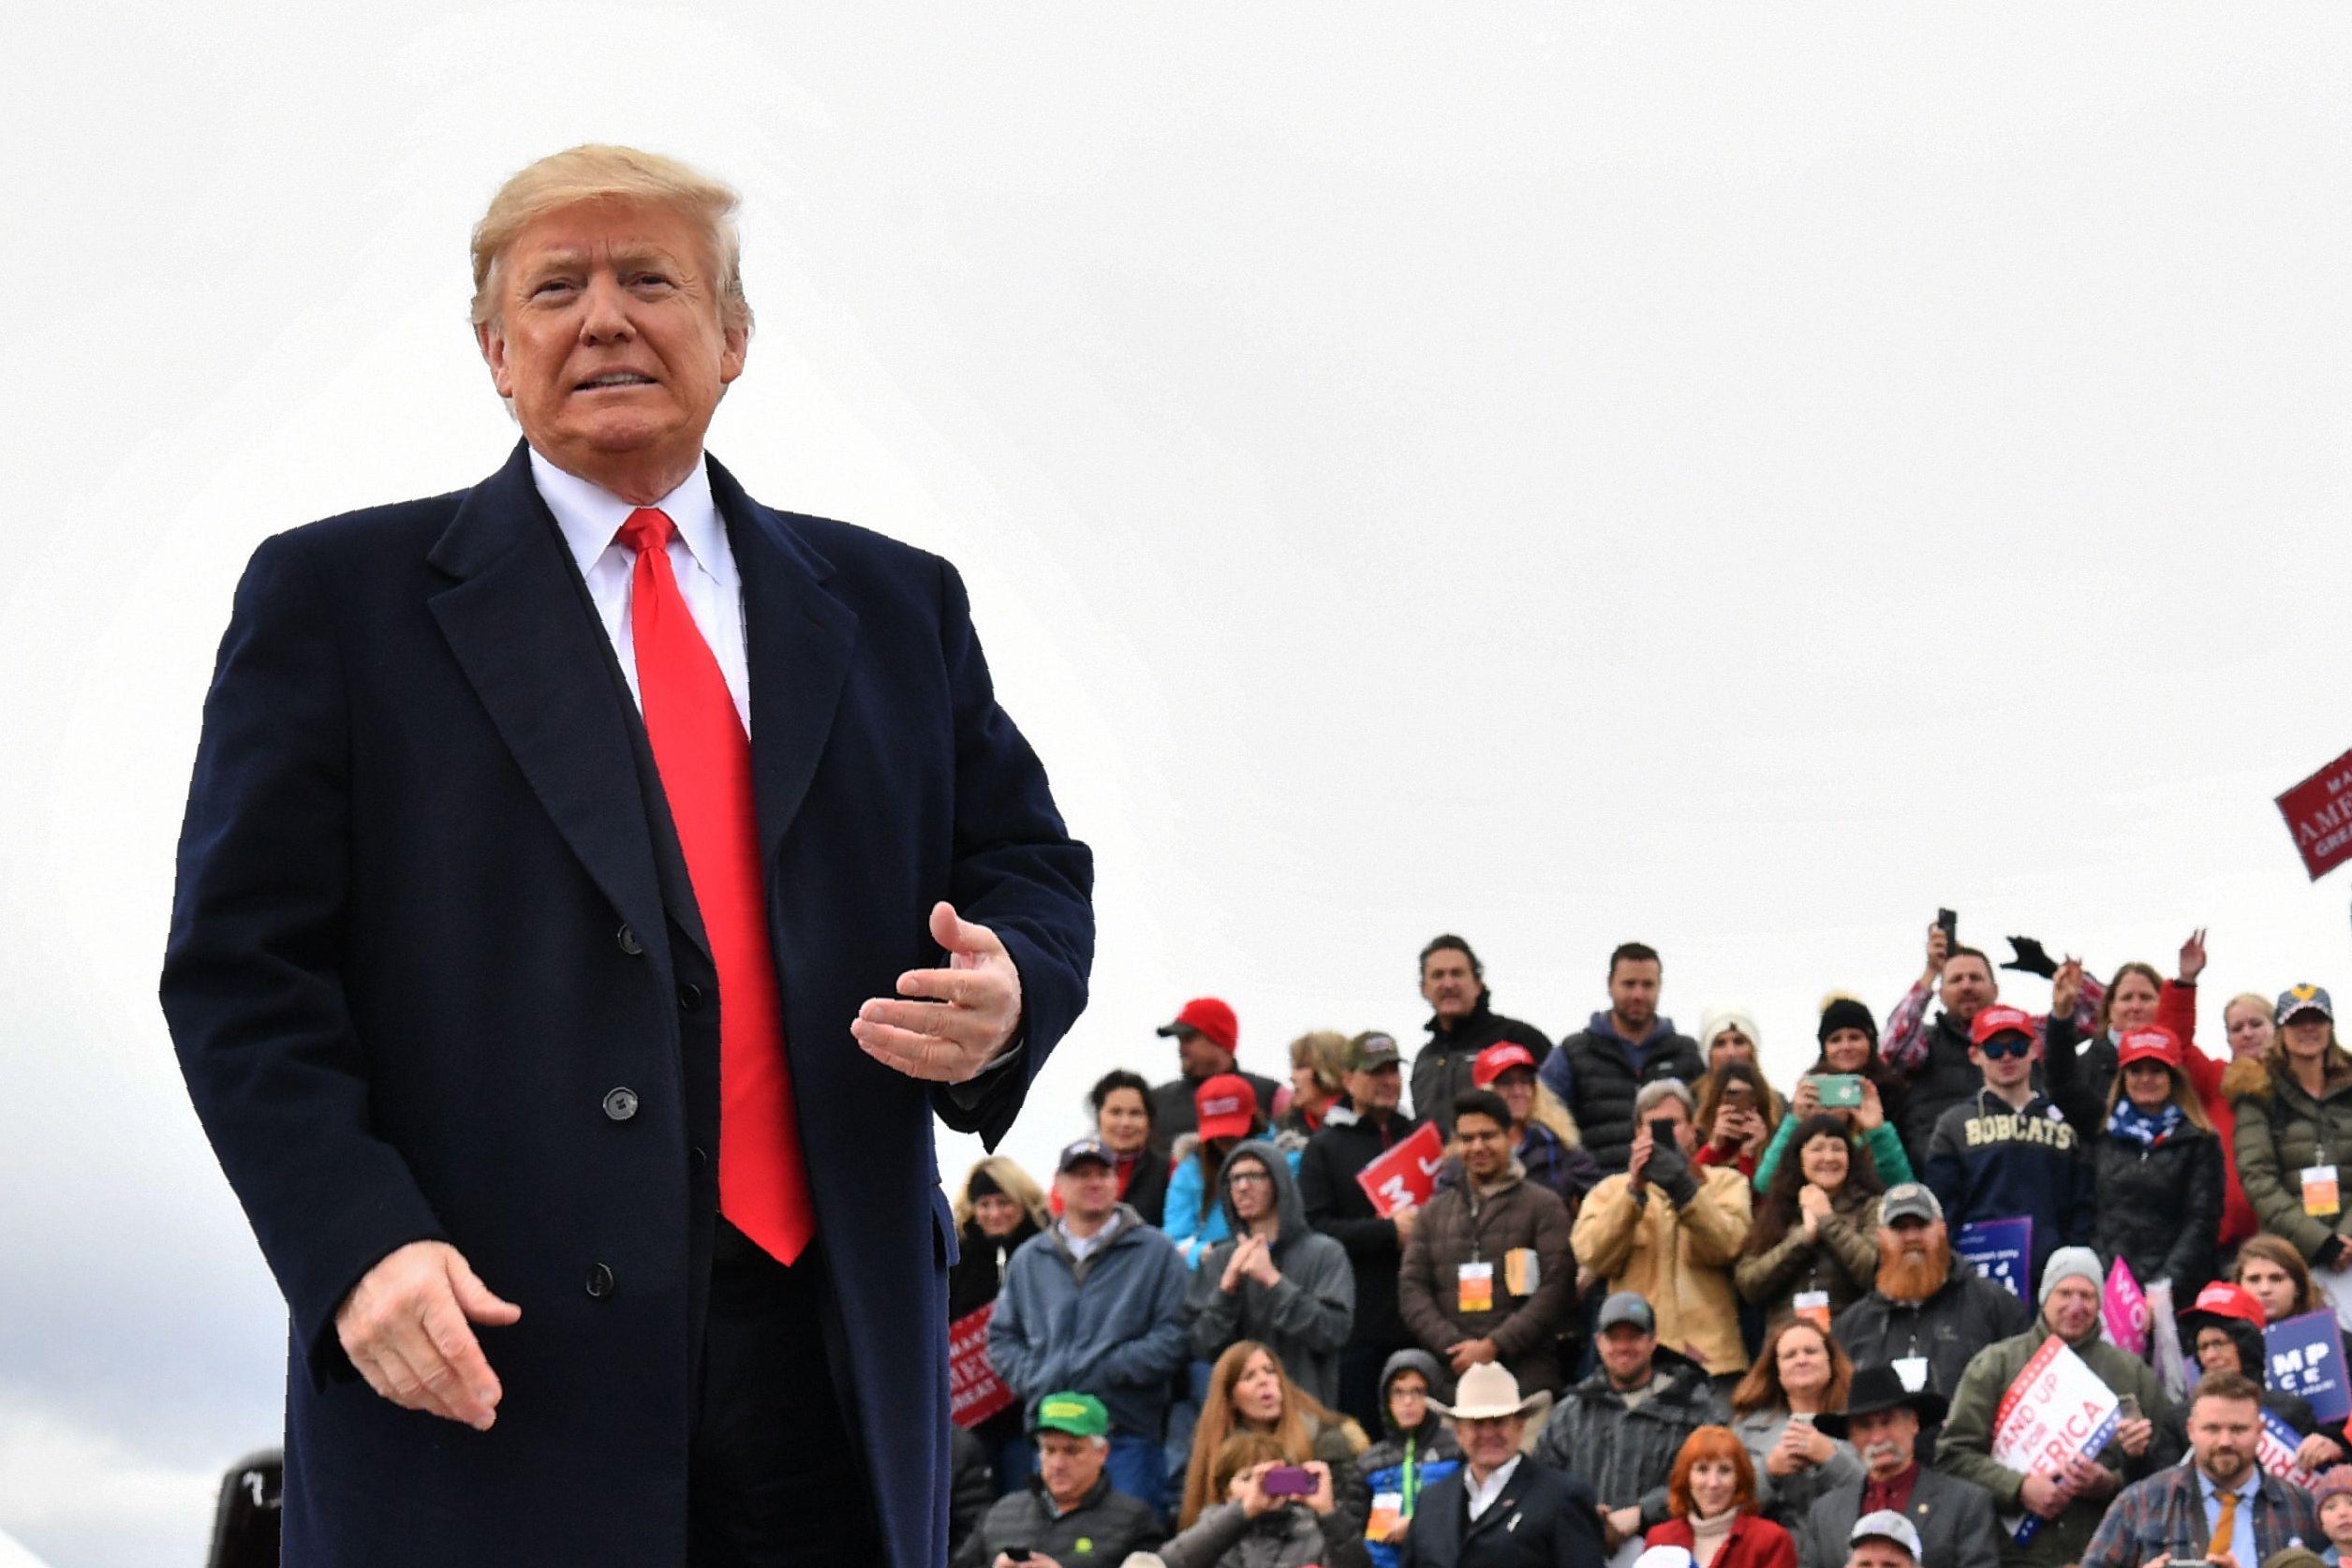 President Donald Trump attends a rally at Bozeman Yellowstone International Airport, on November 3, 2018 in Belgrade, Montana.